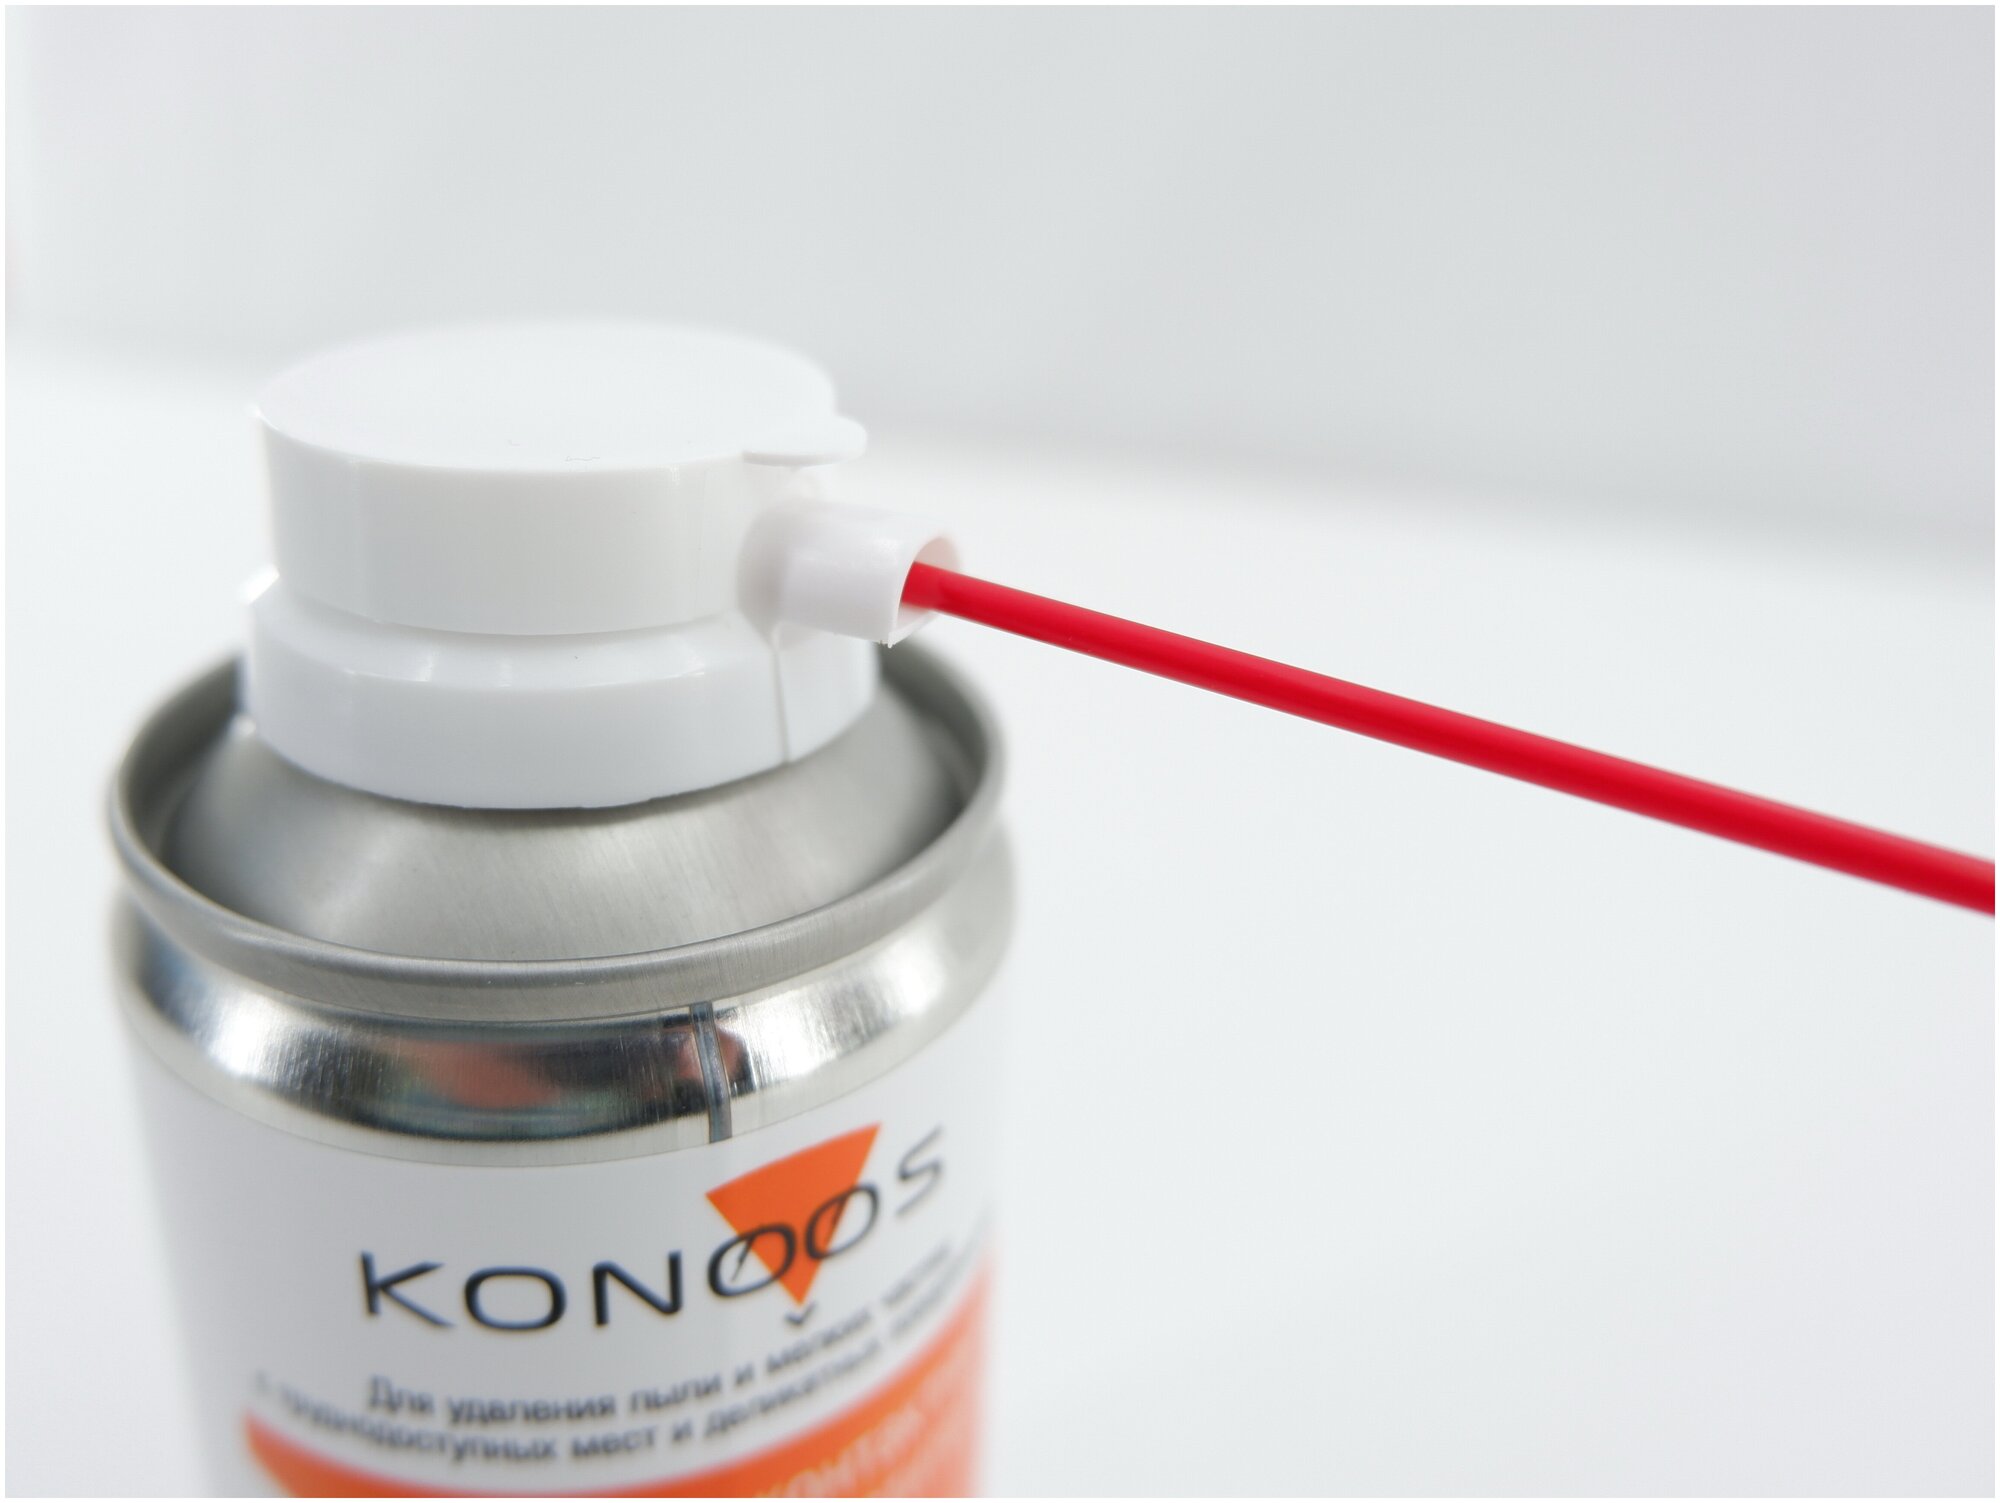 Konoos KAD-210 пневматический очиститель+чистящий спрей